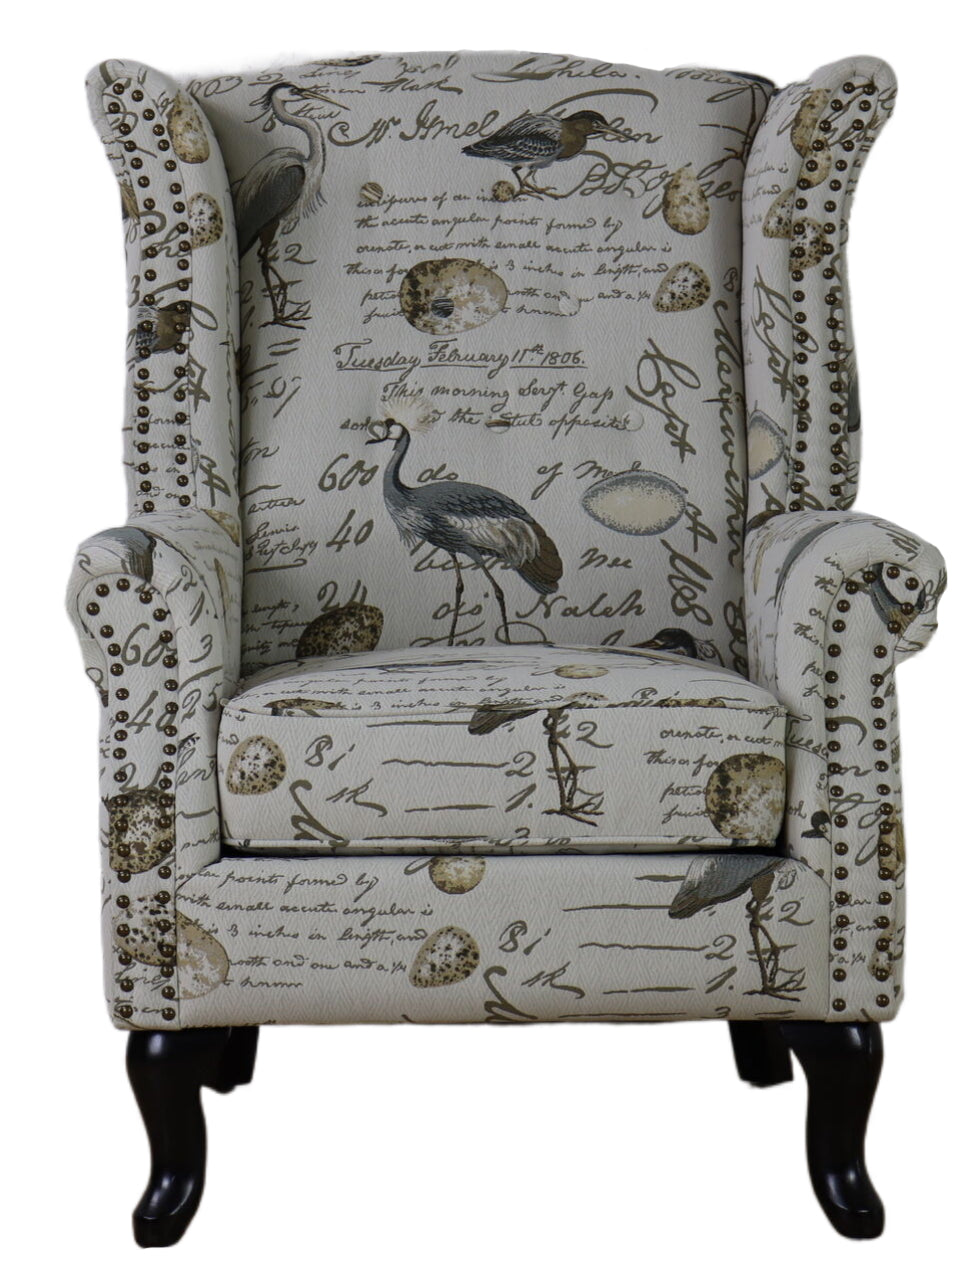 TNC Wing Chair, Birdsong 2199